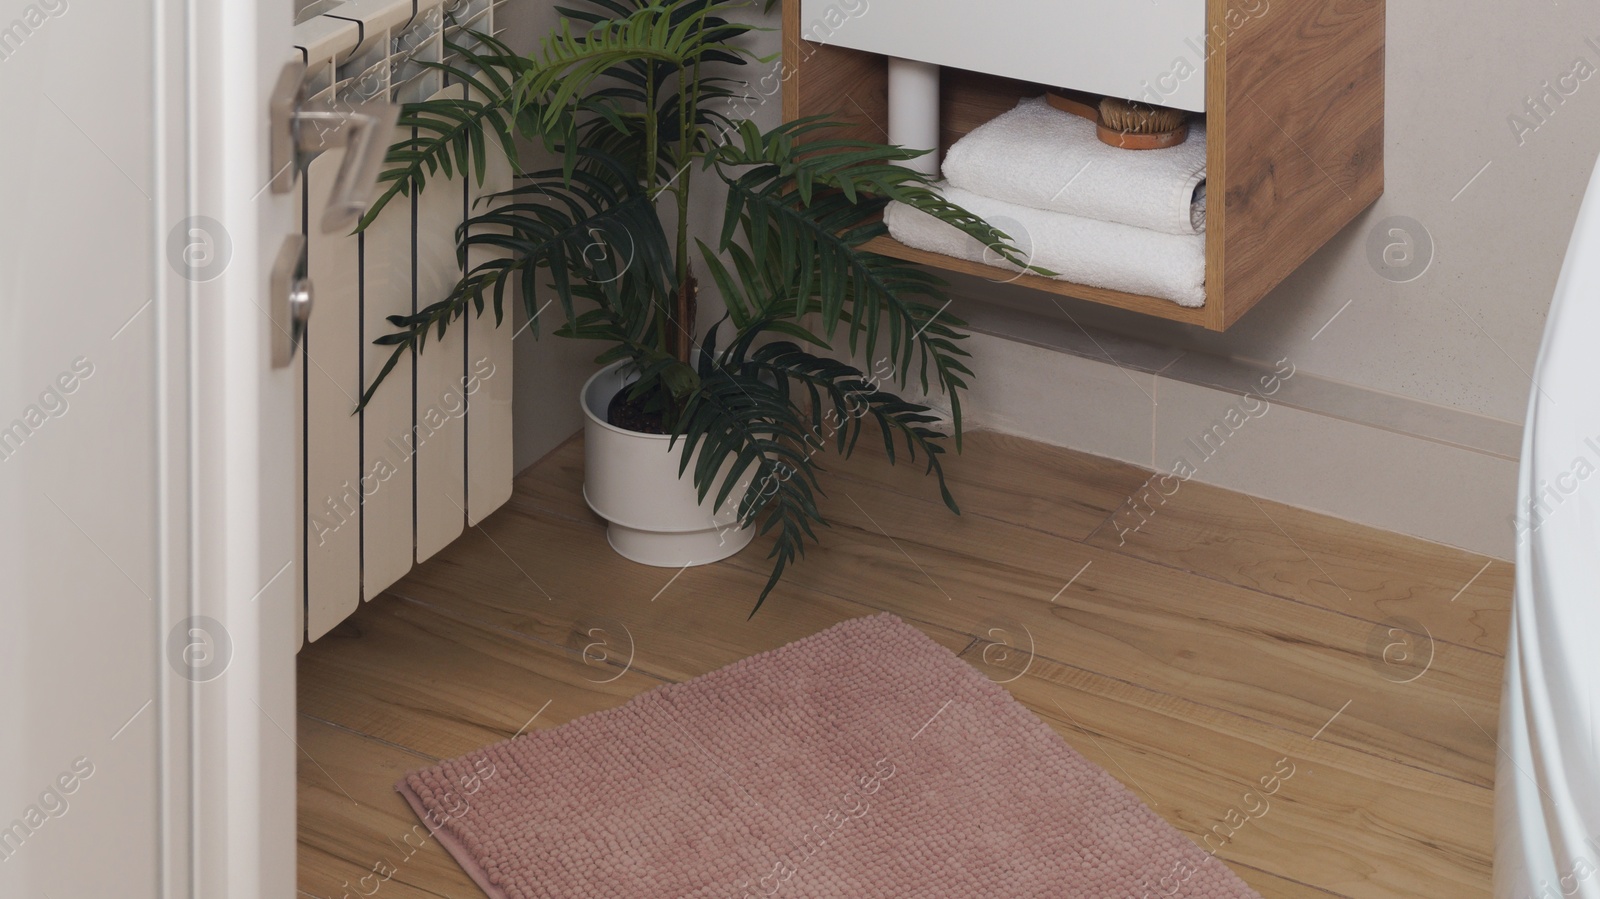 Photo of Soft bath mat near houseplant on wooden floor in bathroom